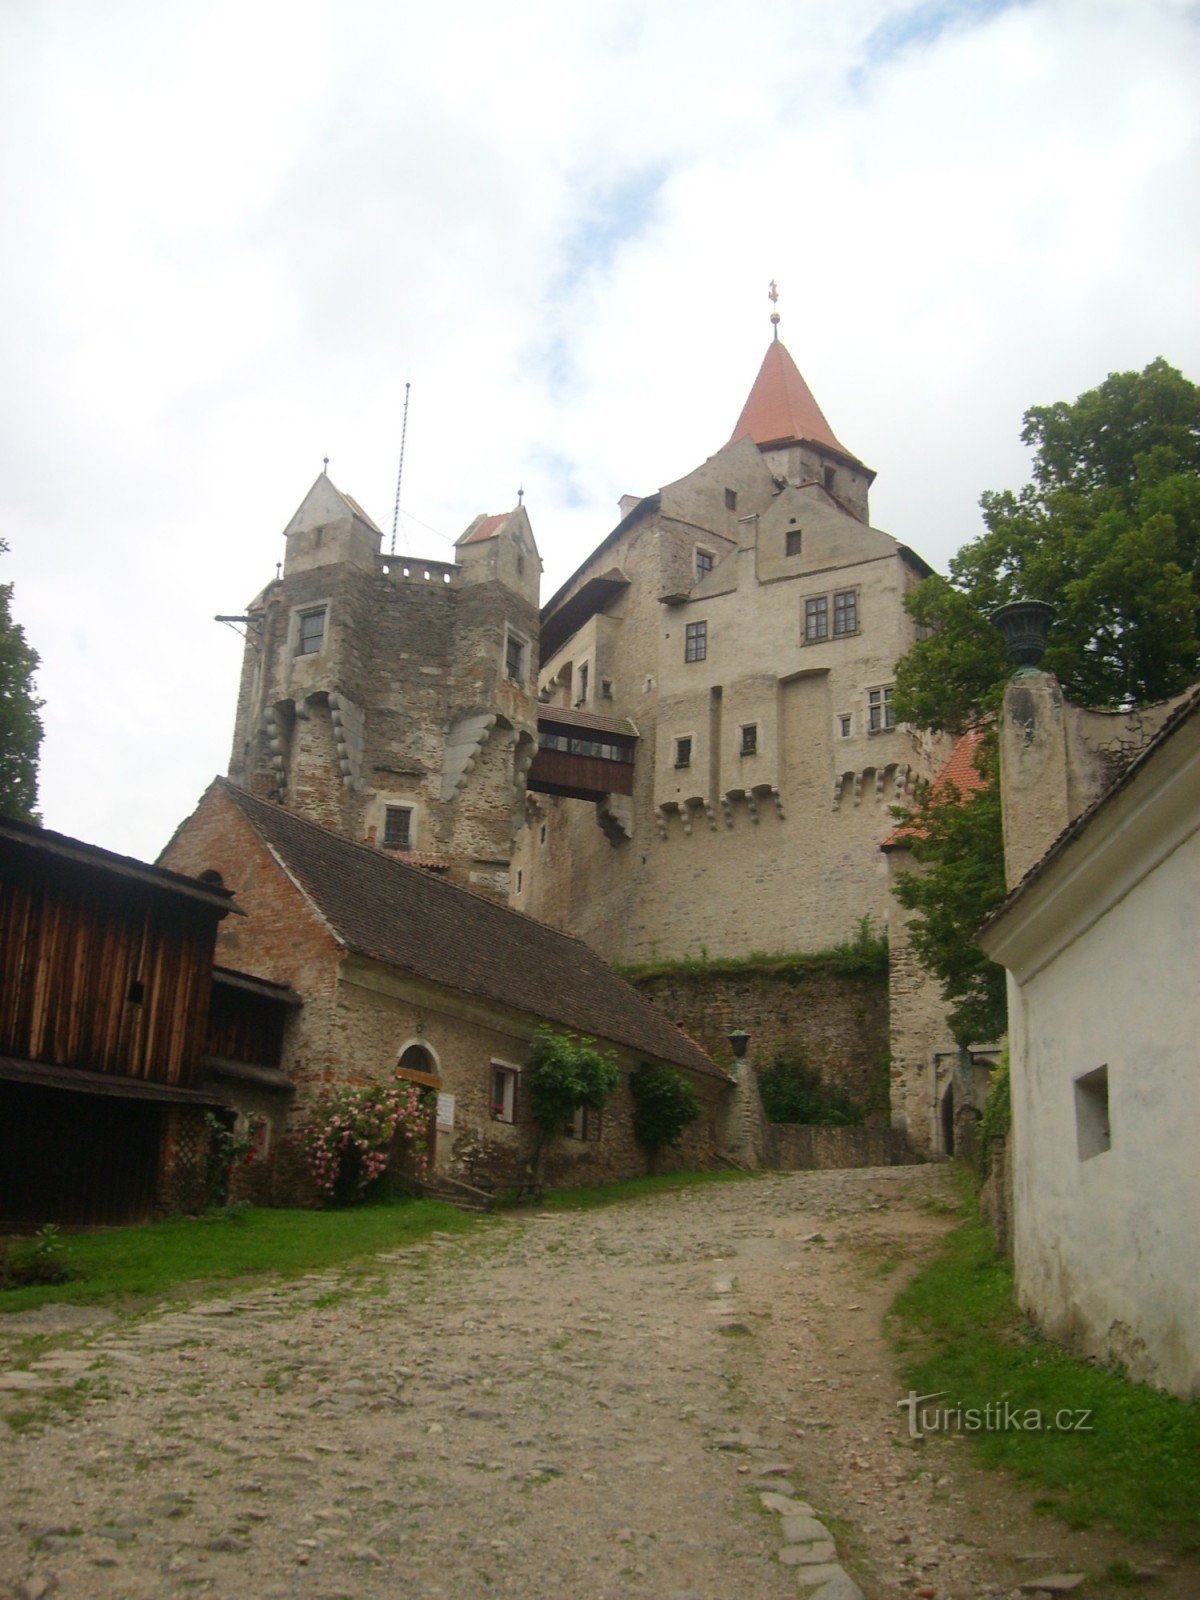 Pernštejn, king of Moravian castles